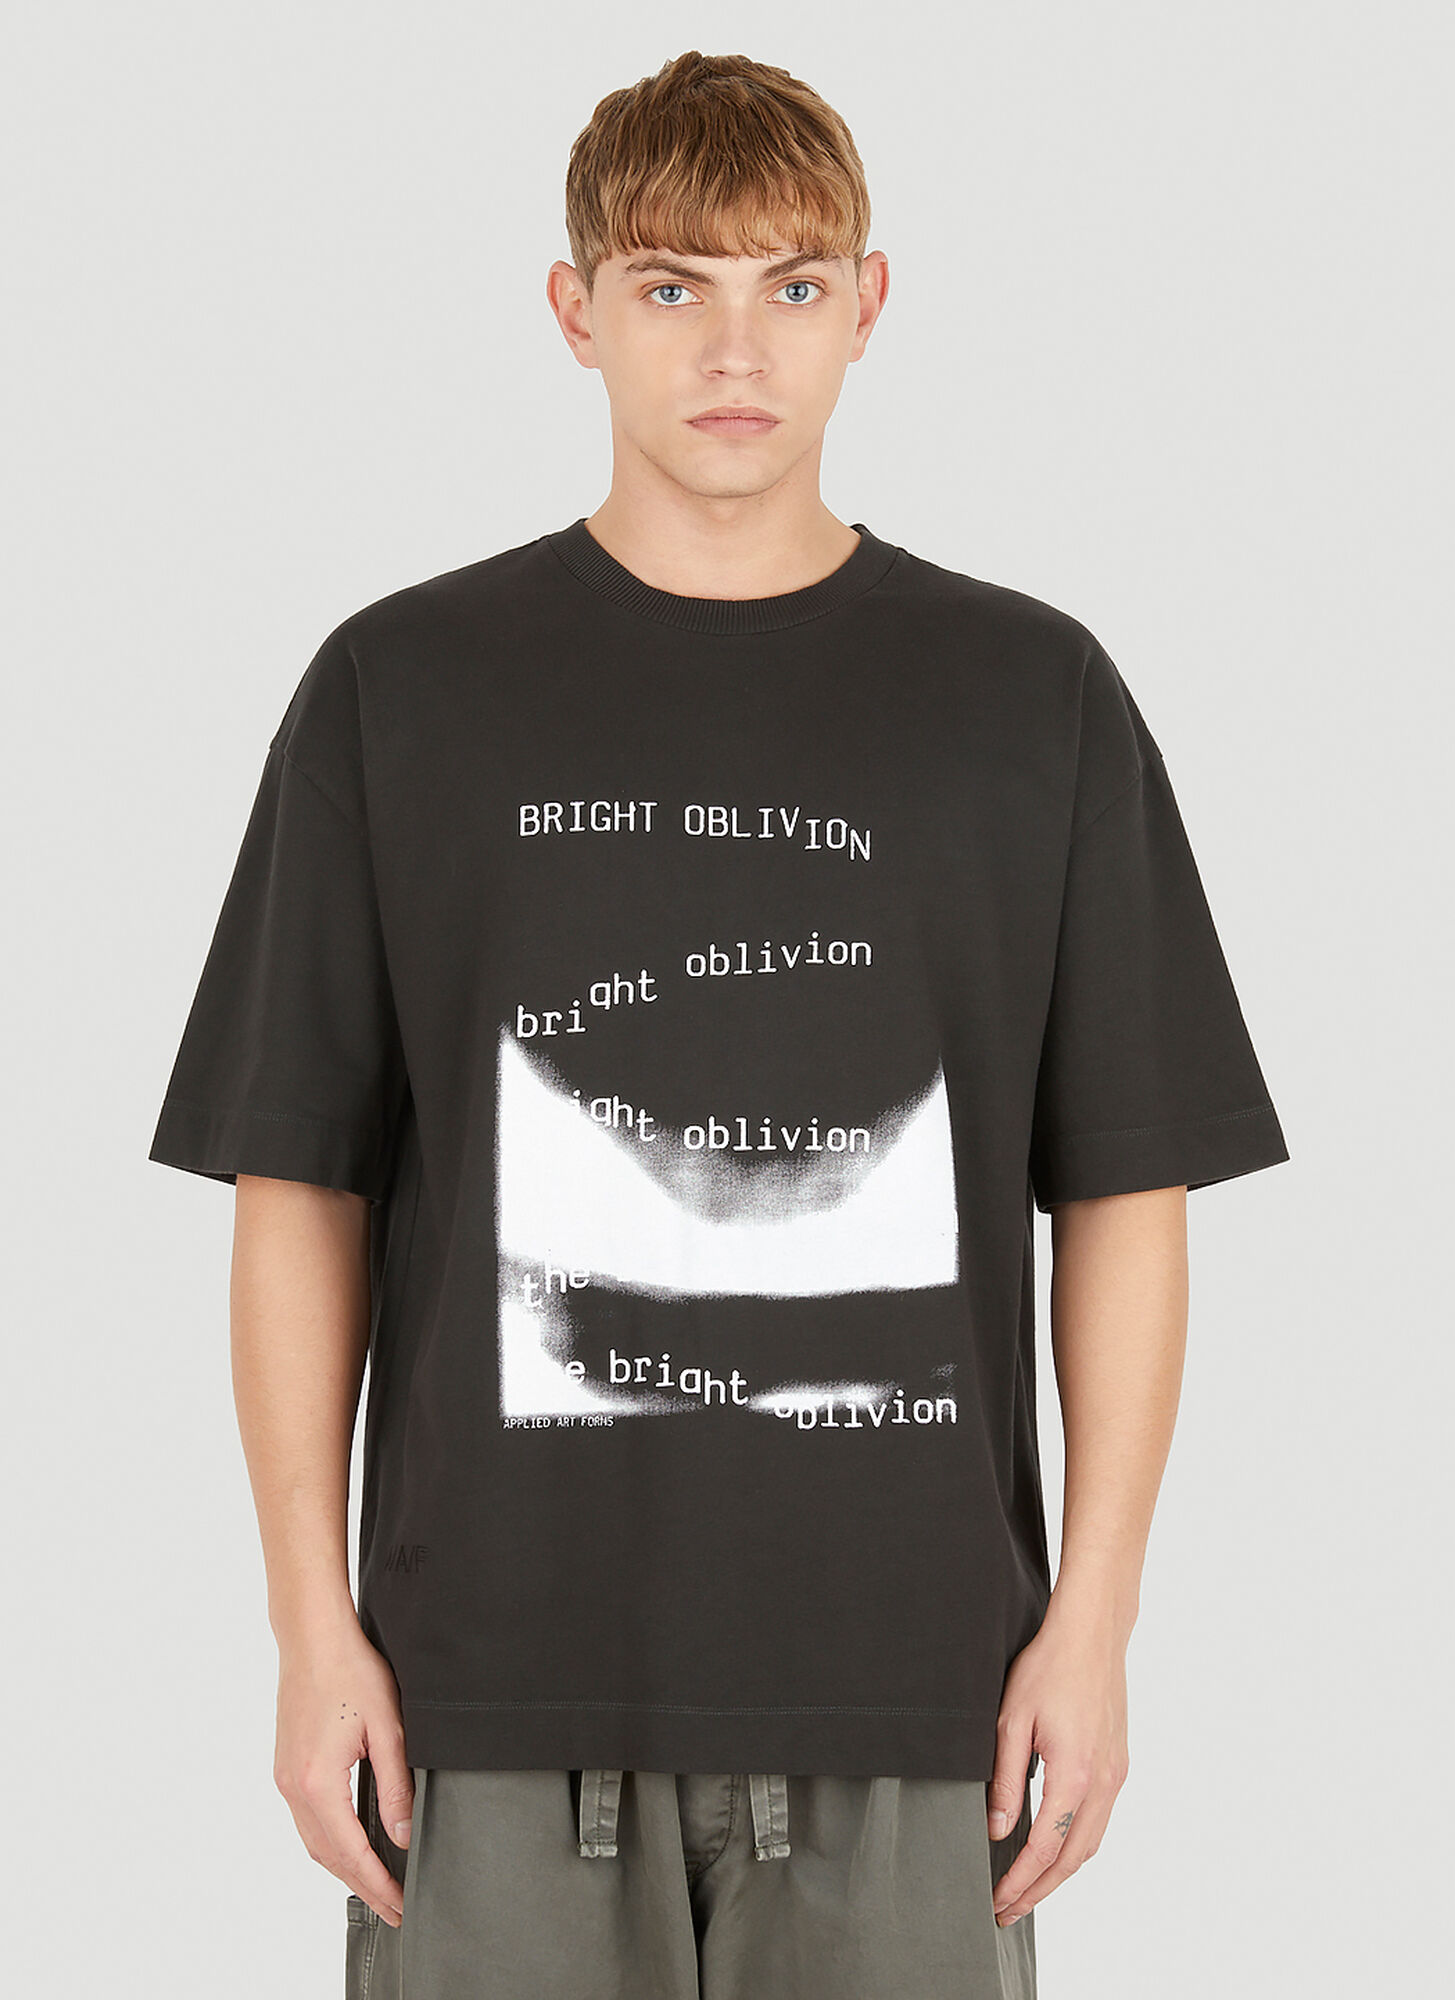 Applied Art Forms Oblivion T-shirt In Black